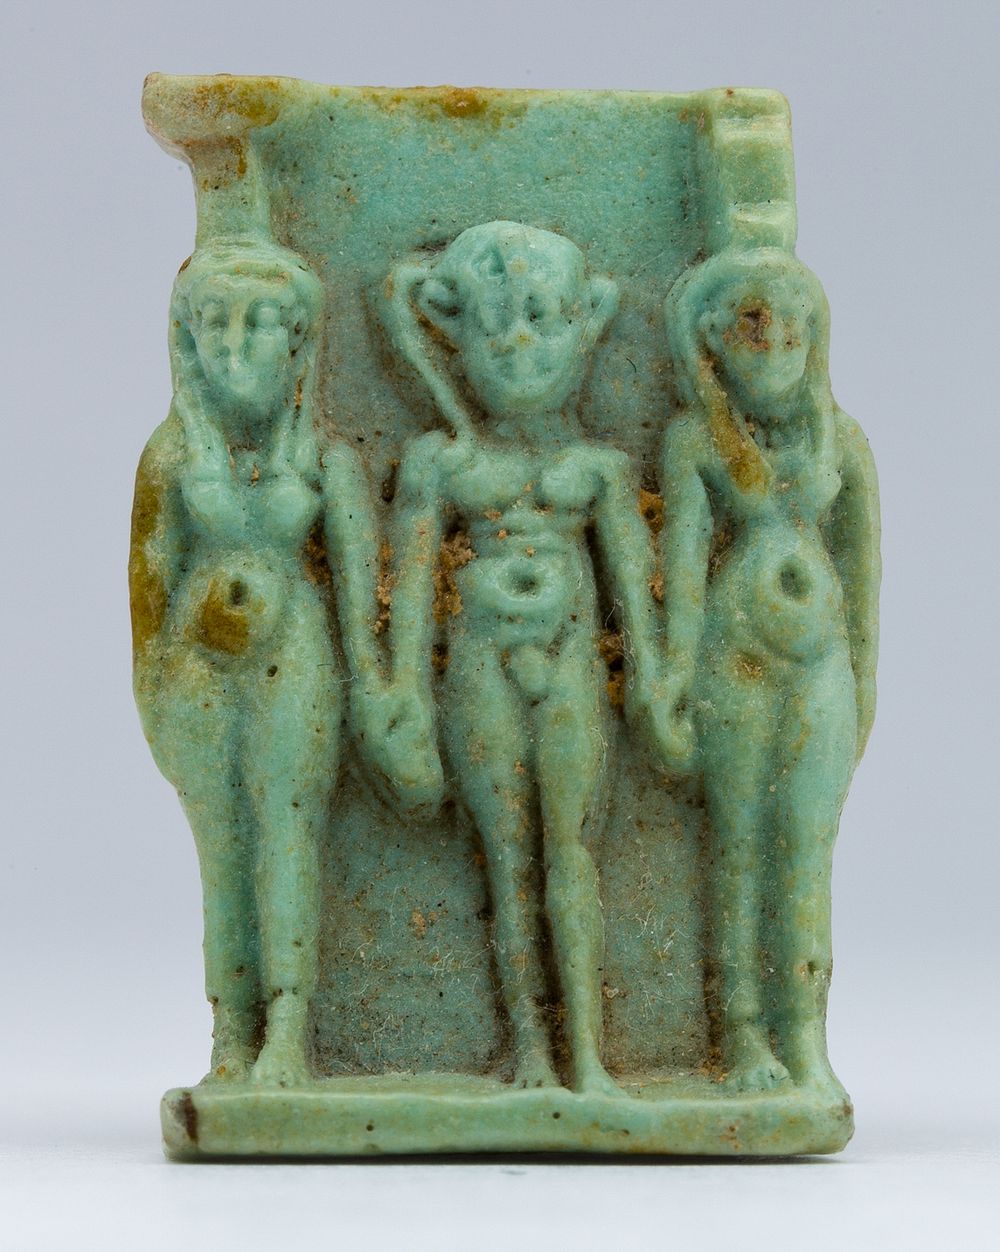 Nephthys, Horus, and Isis Amulet